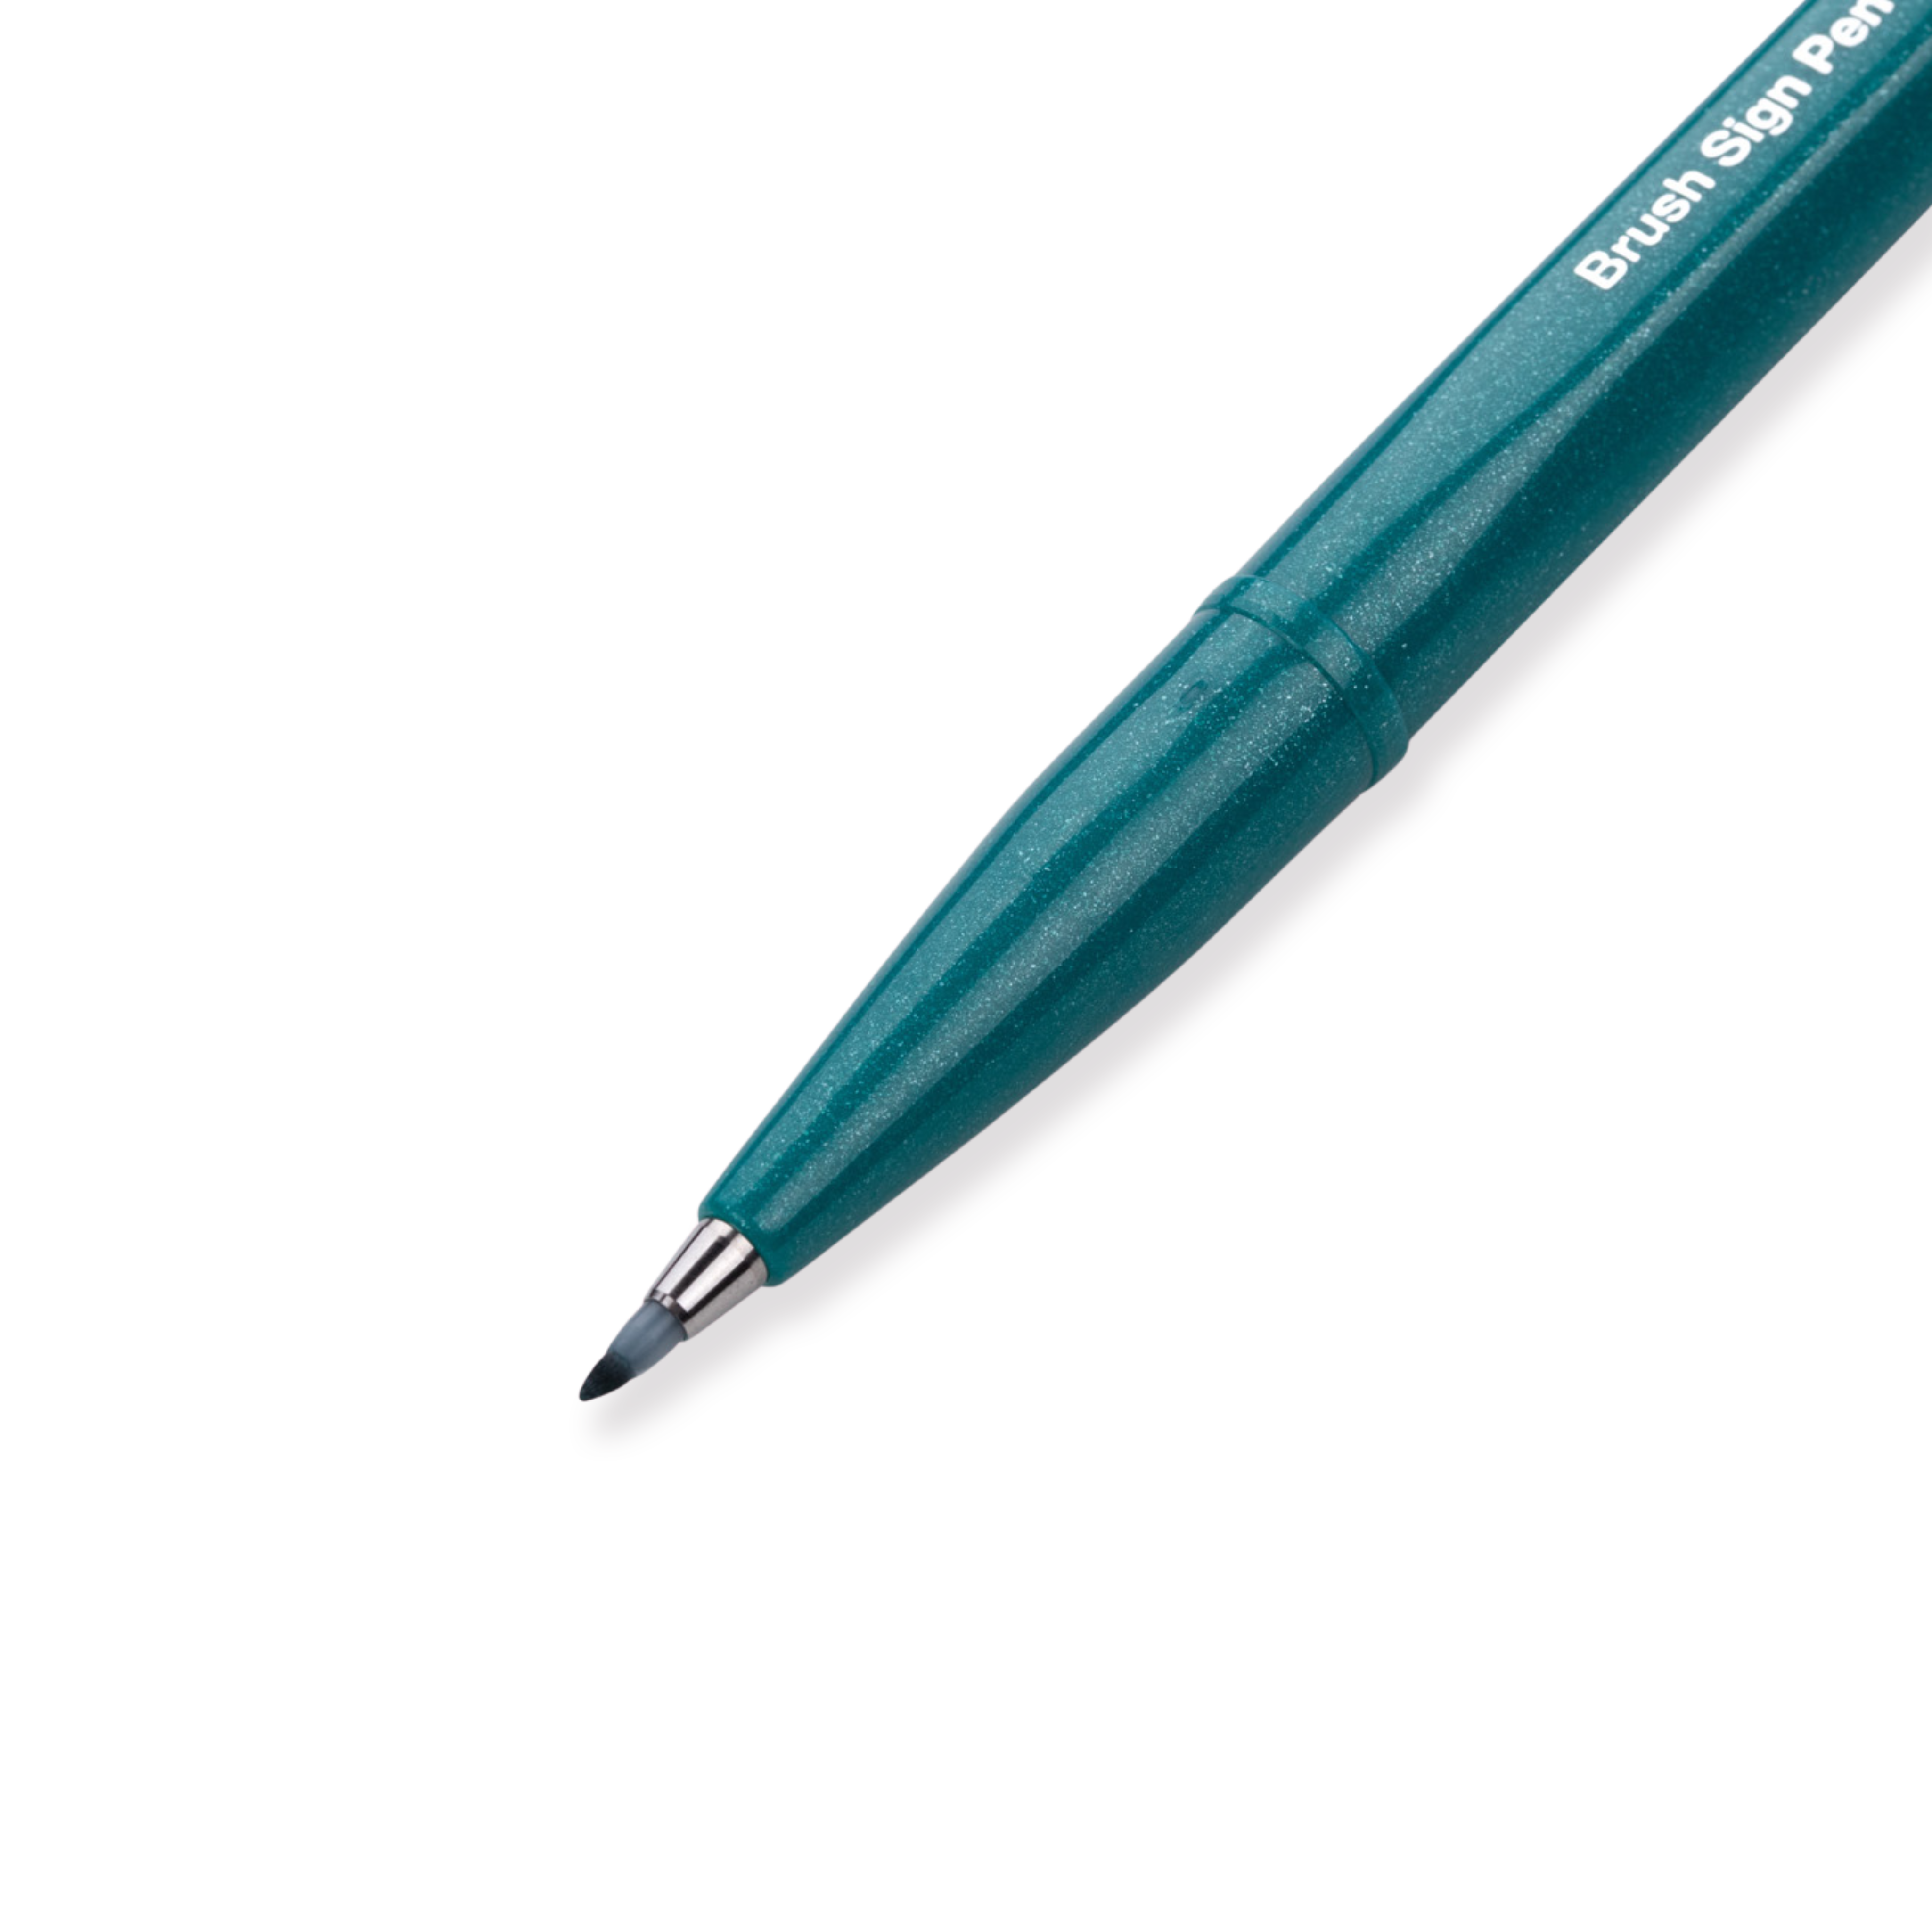 Pentel Fude Touch Brush Sign Pen - Verde turquesa - Nuevos colores 2020